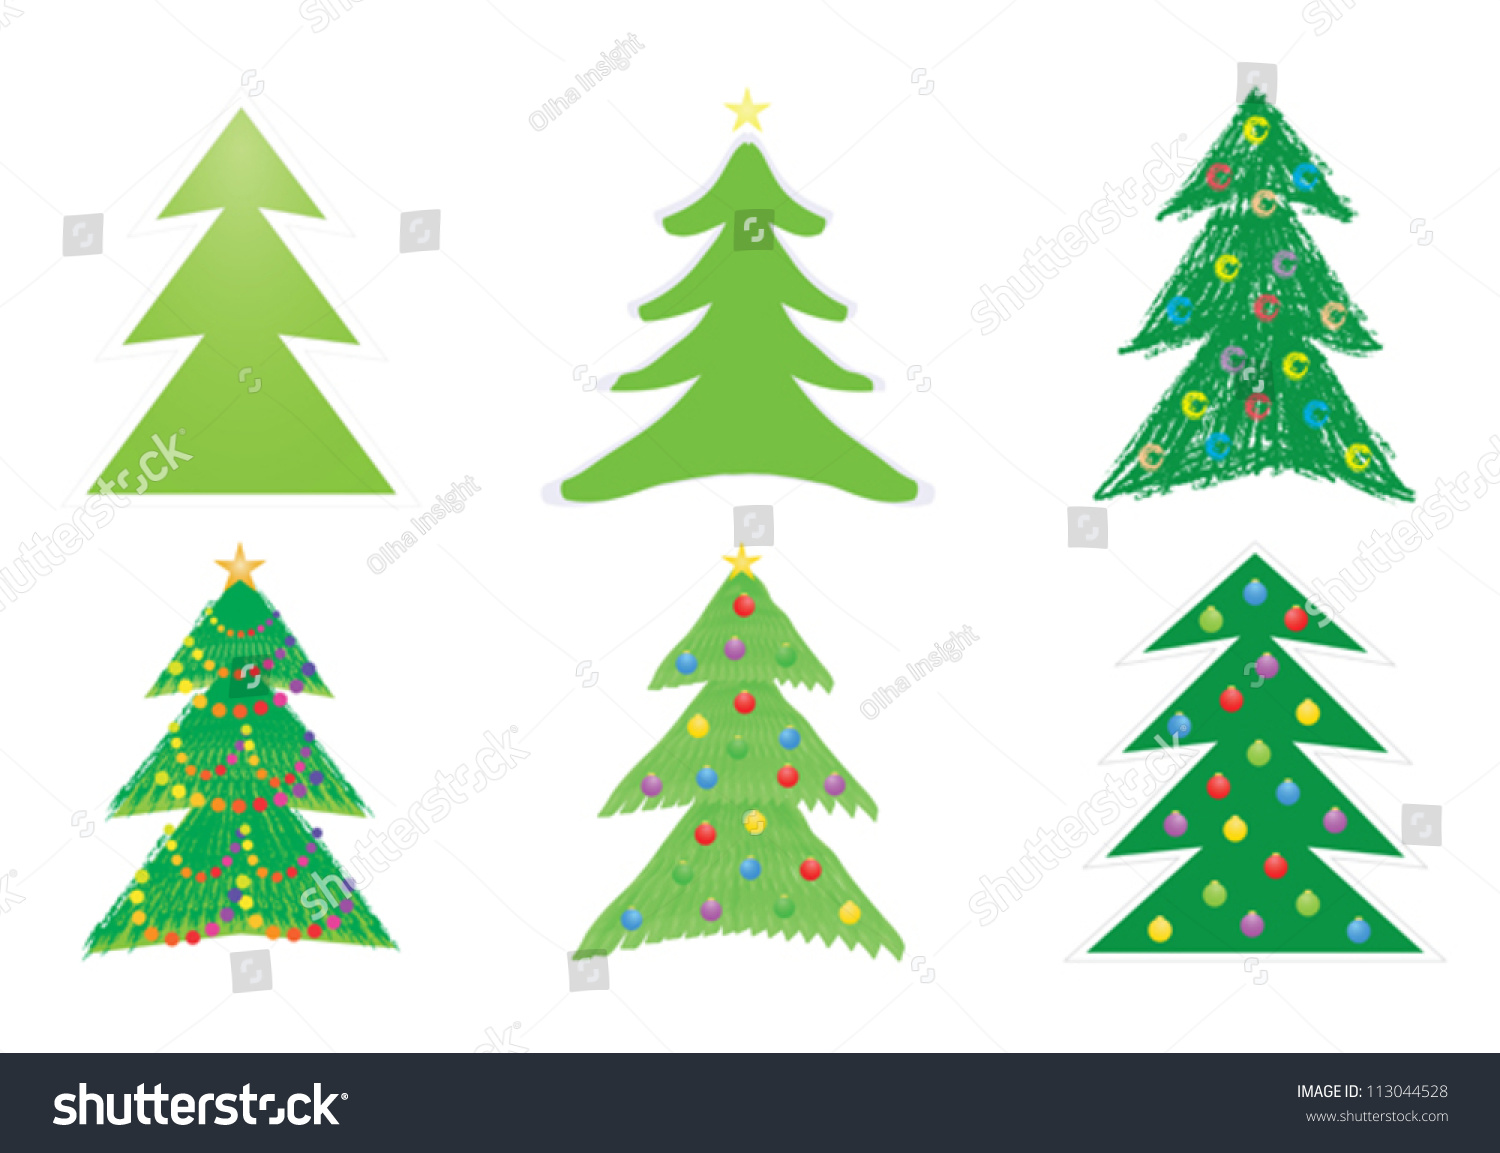 Set Of Christmas Tree Drawings Vector Illustration - 113044528 ...